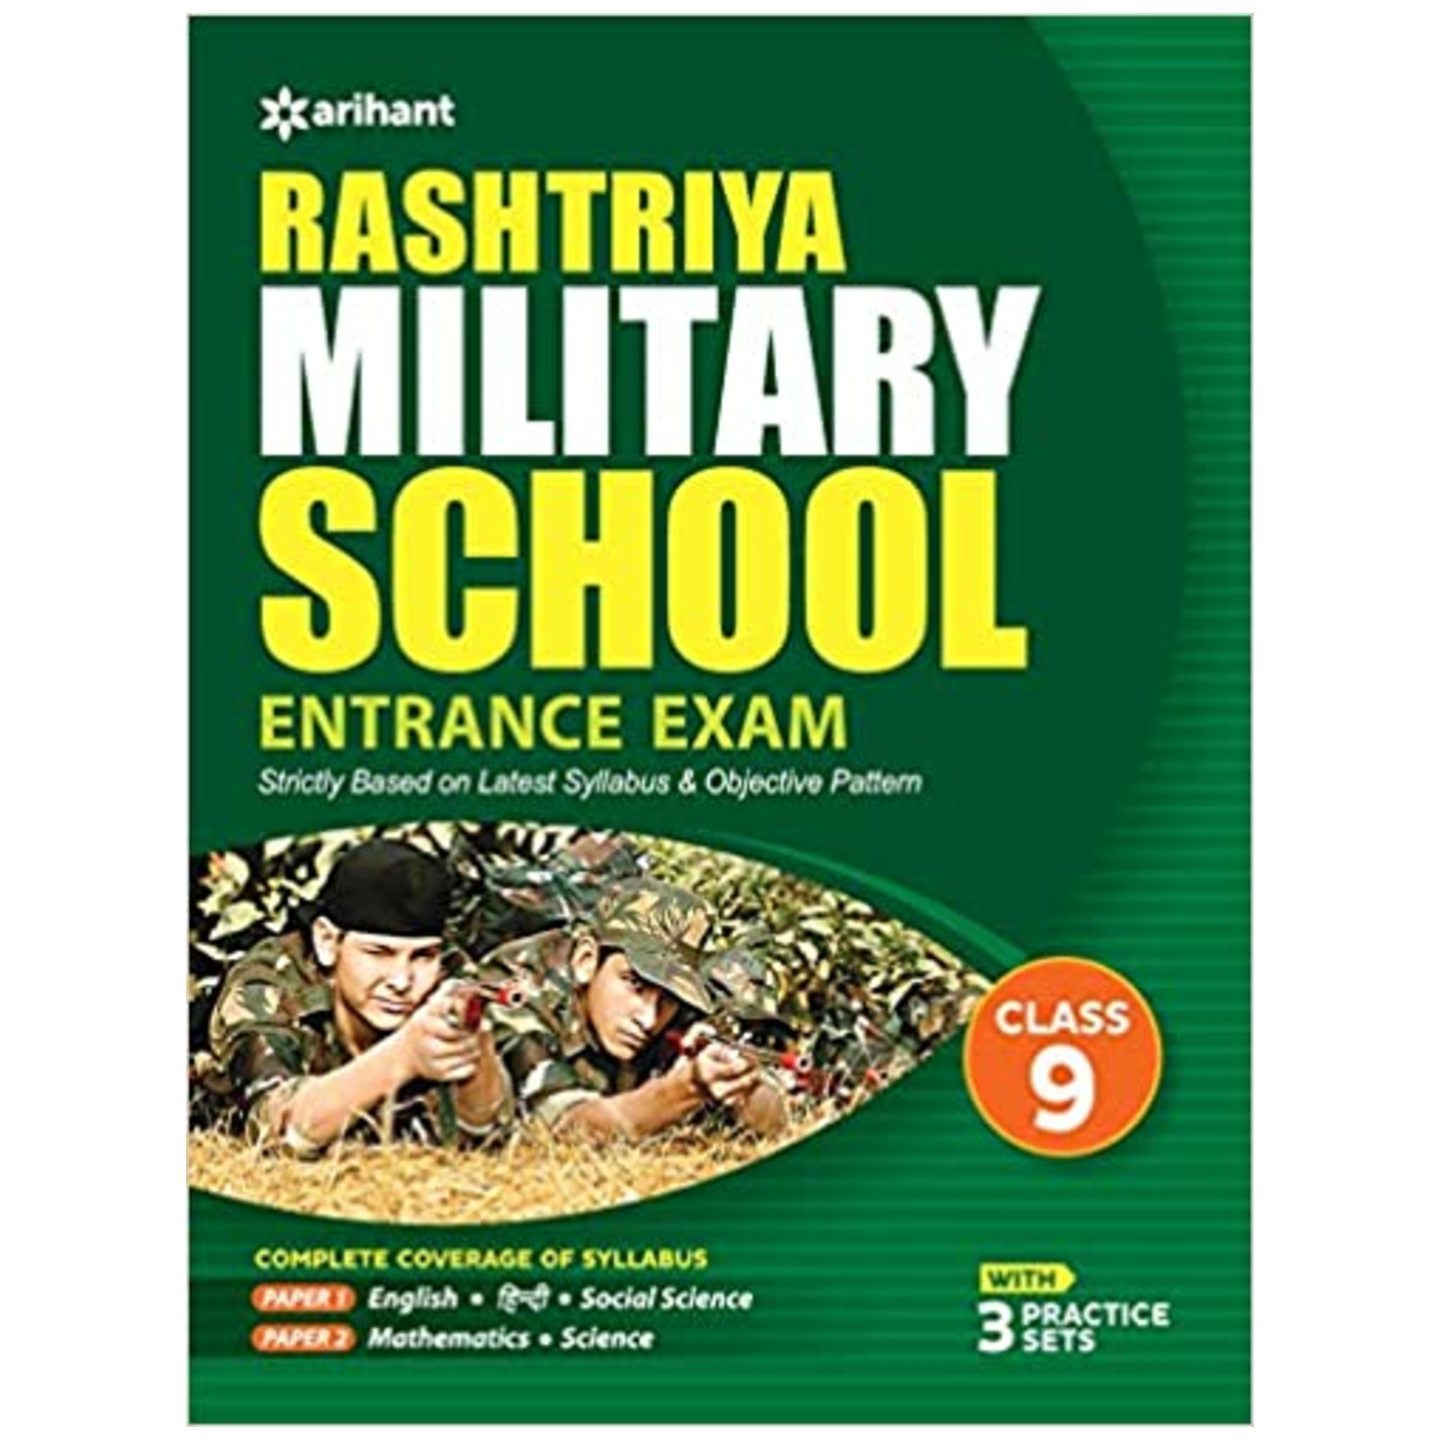 Rashtriya Military School Class 9th ARIHANT